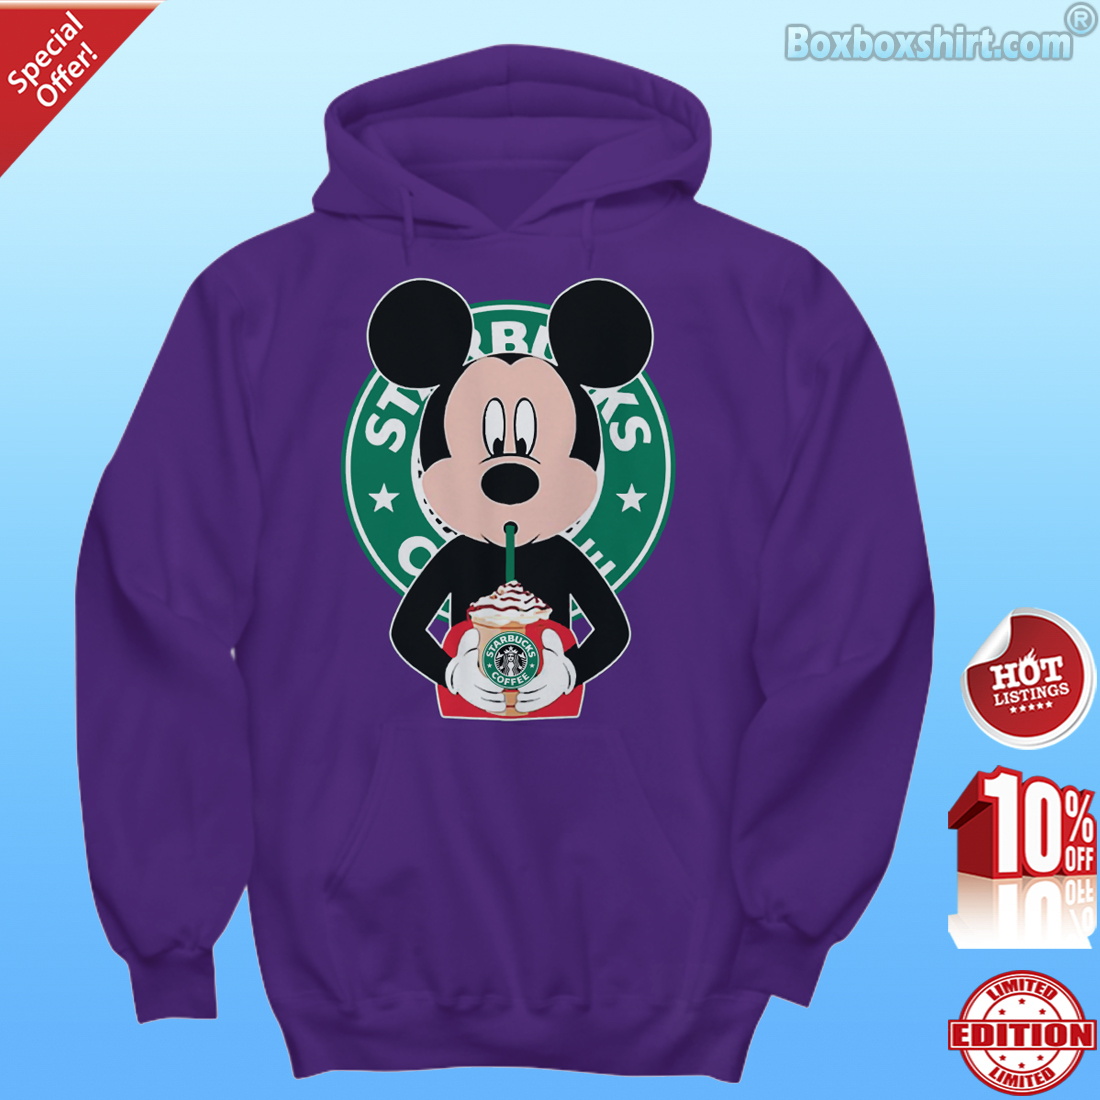 Mickey mouse drinks starbucks coffee shirt, premium tee, unisex tee 3